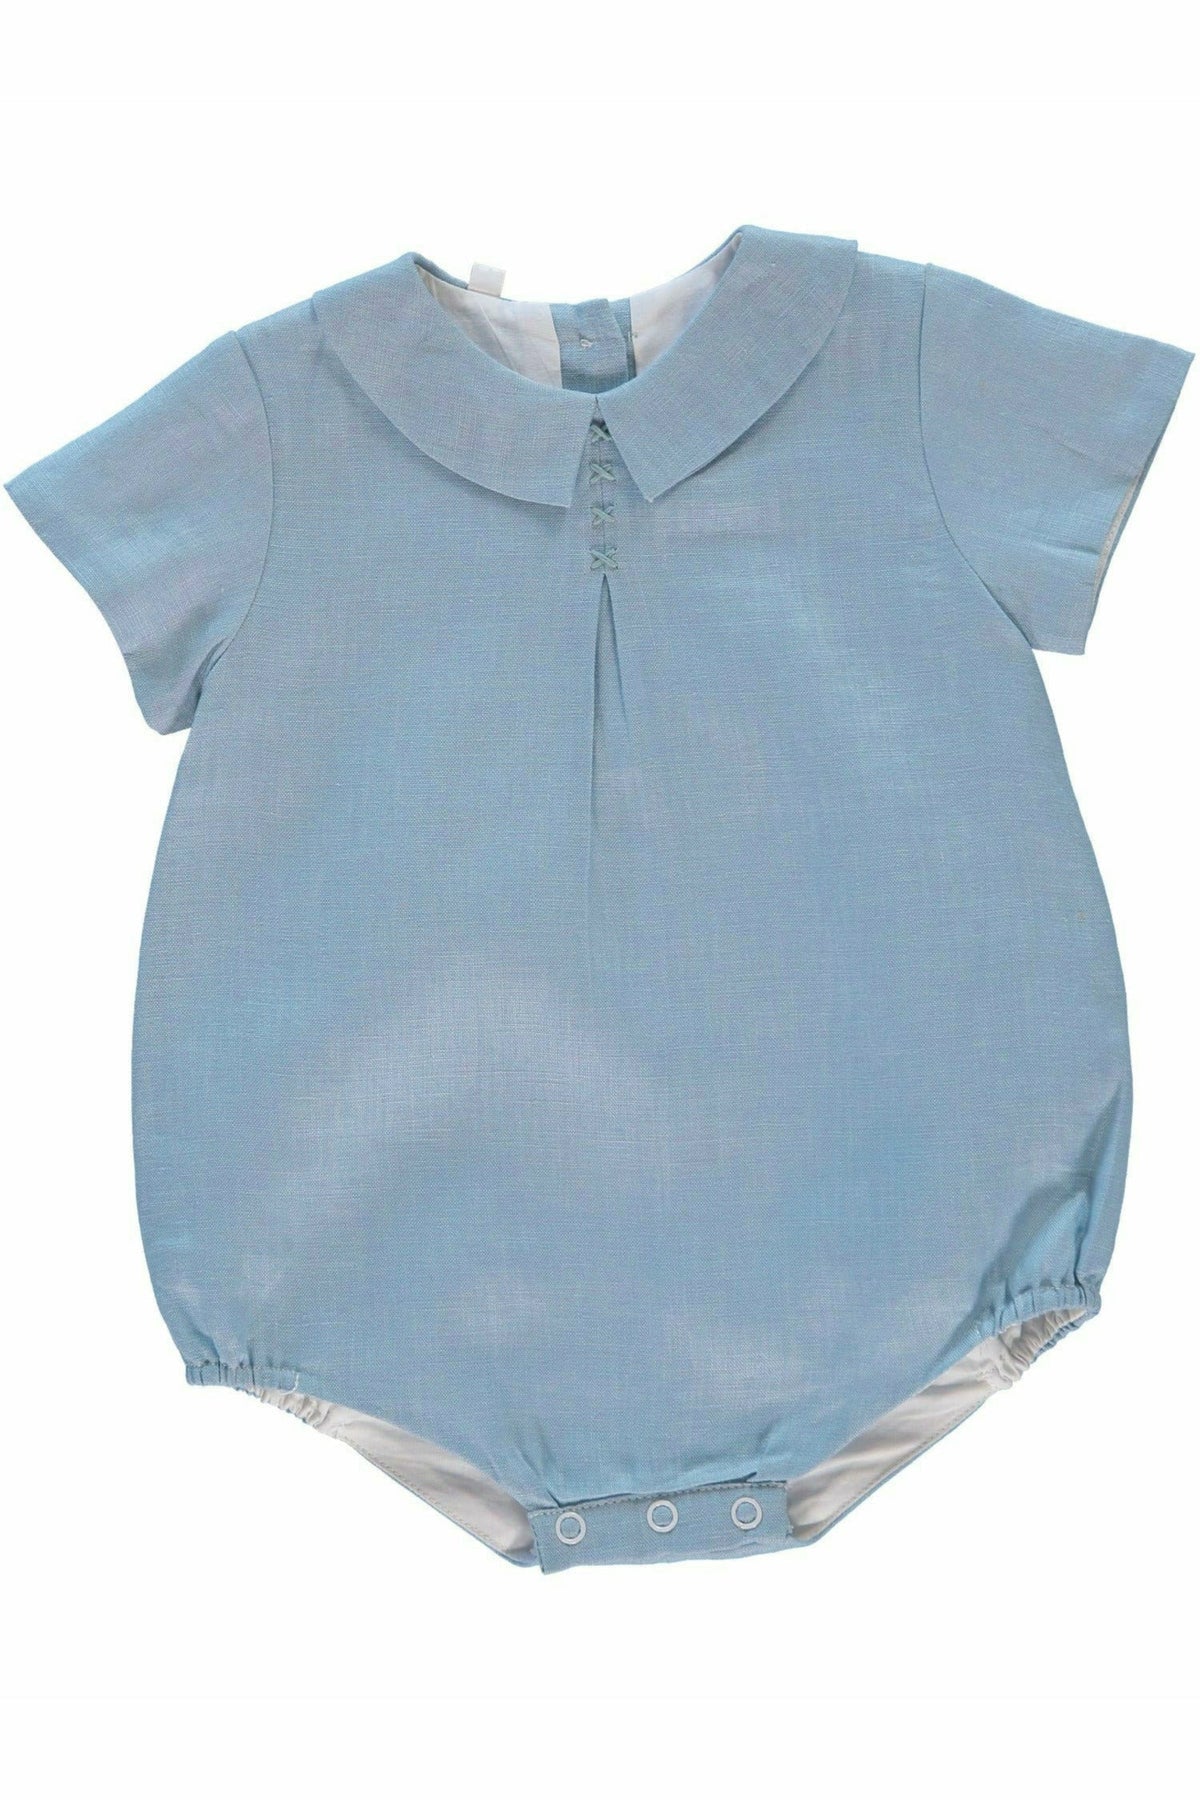 Carriage Boutique Linen Pleated Baby Boy Bubble Romper 90075 5103